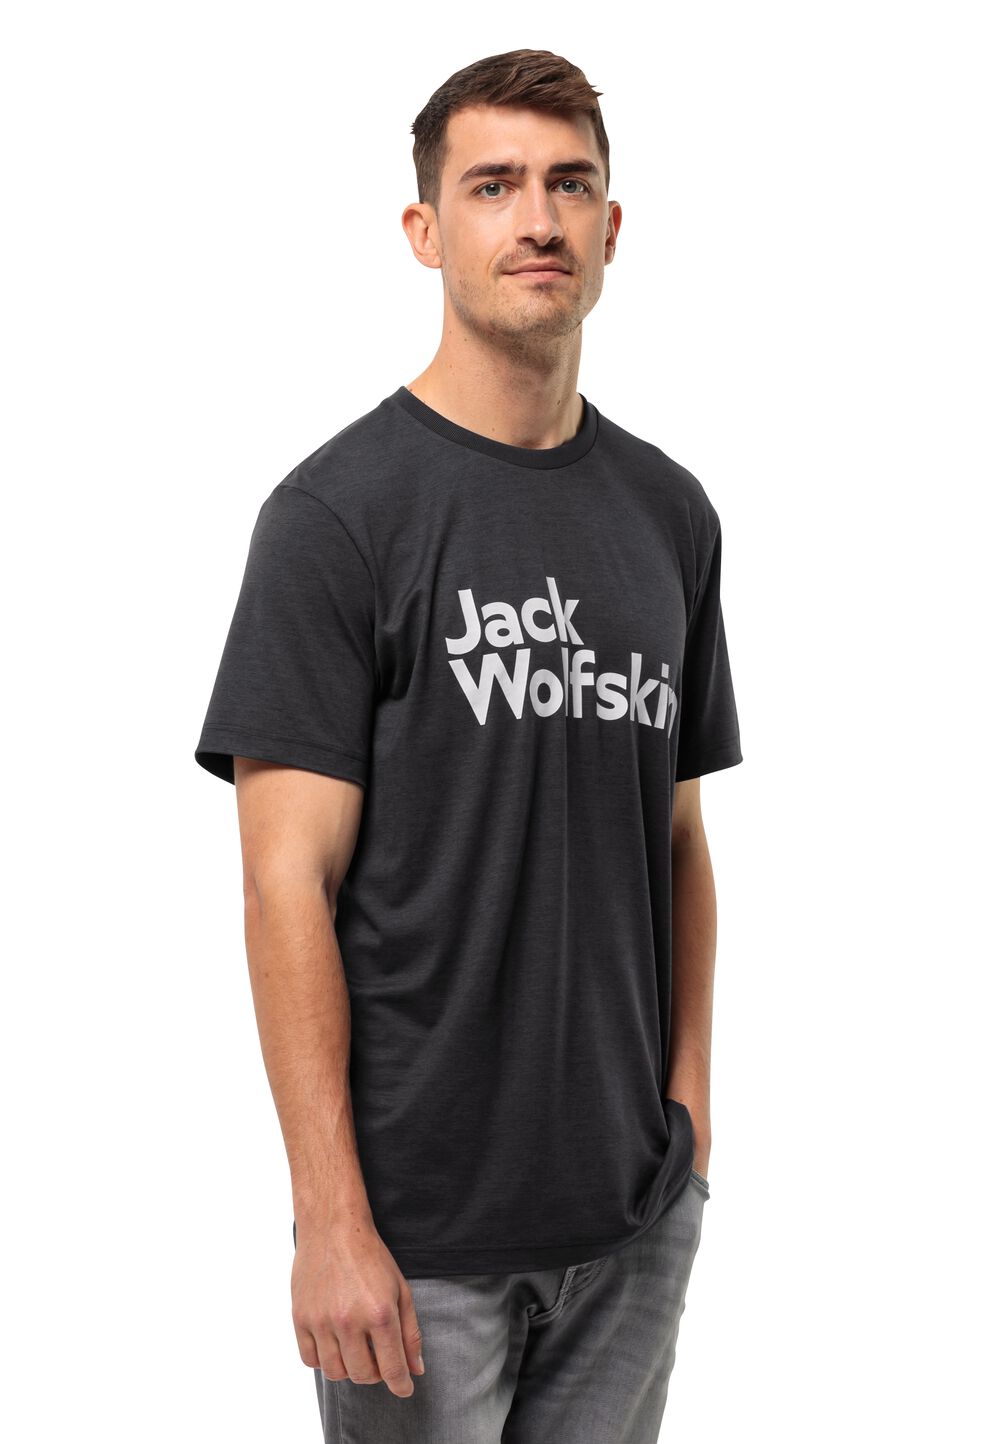 Jack Wolfskin Brand T-Shirt Men Functioneel shirt Heren M zwart black